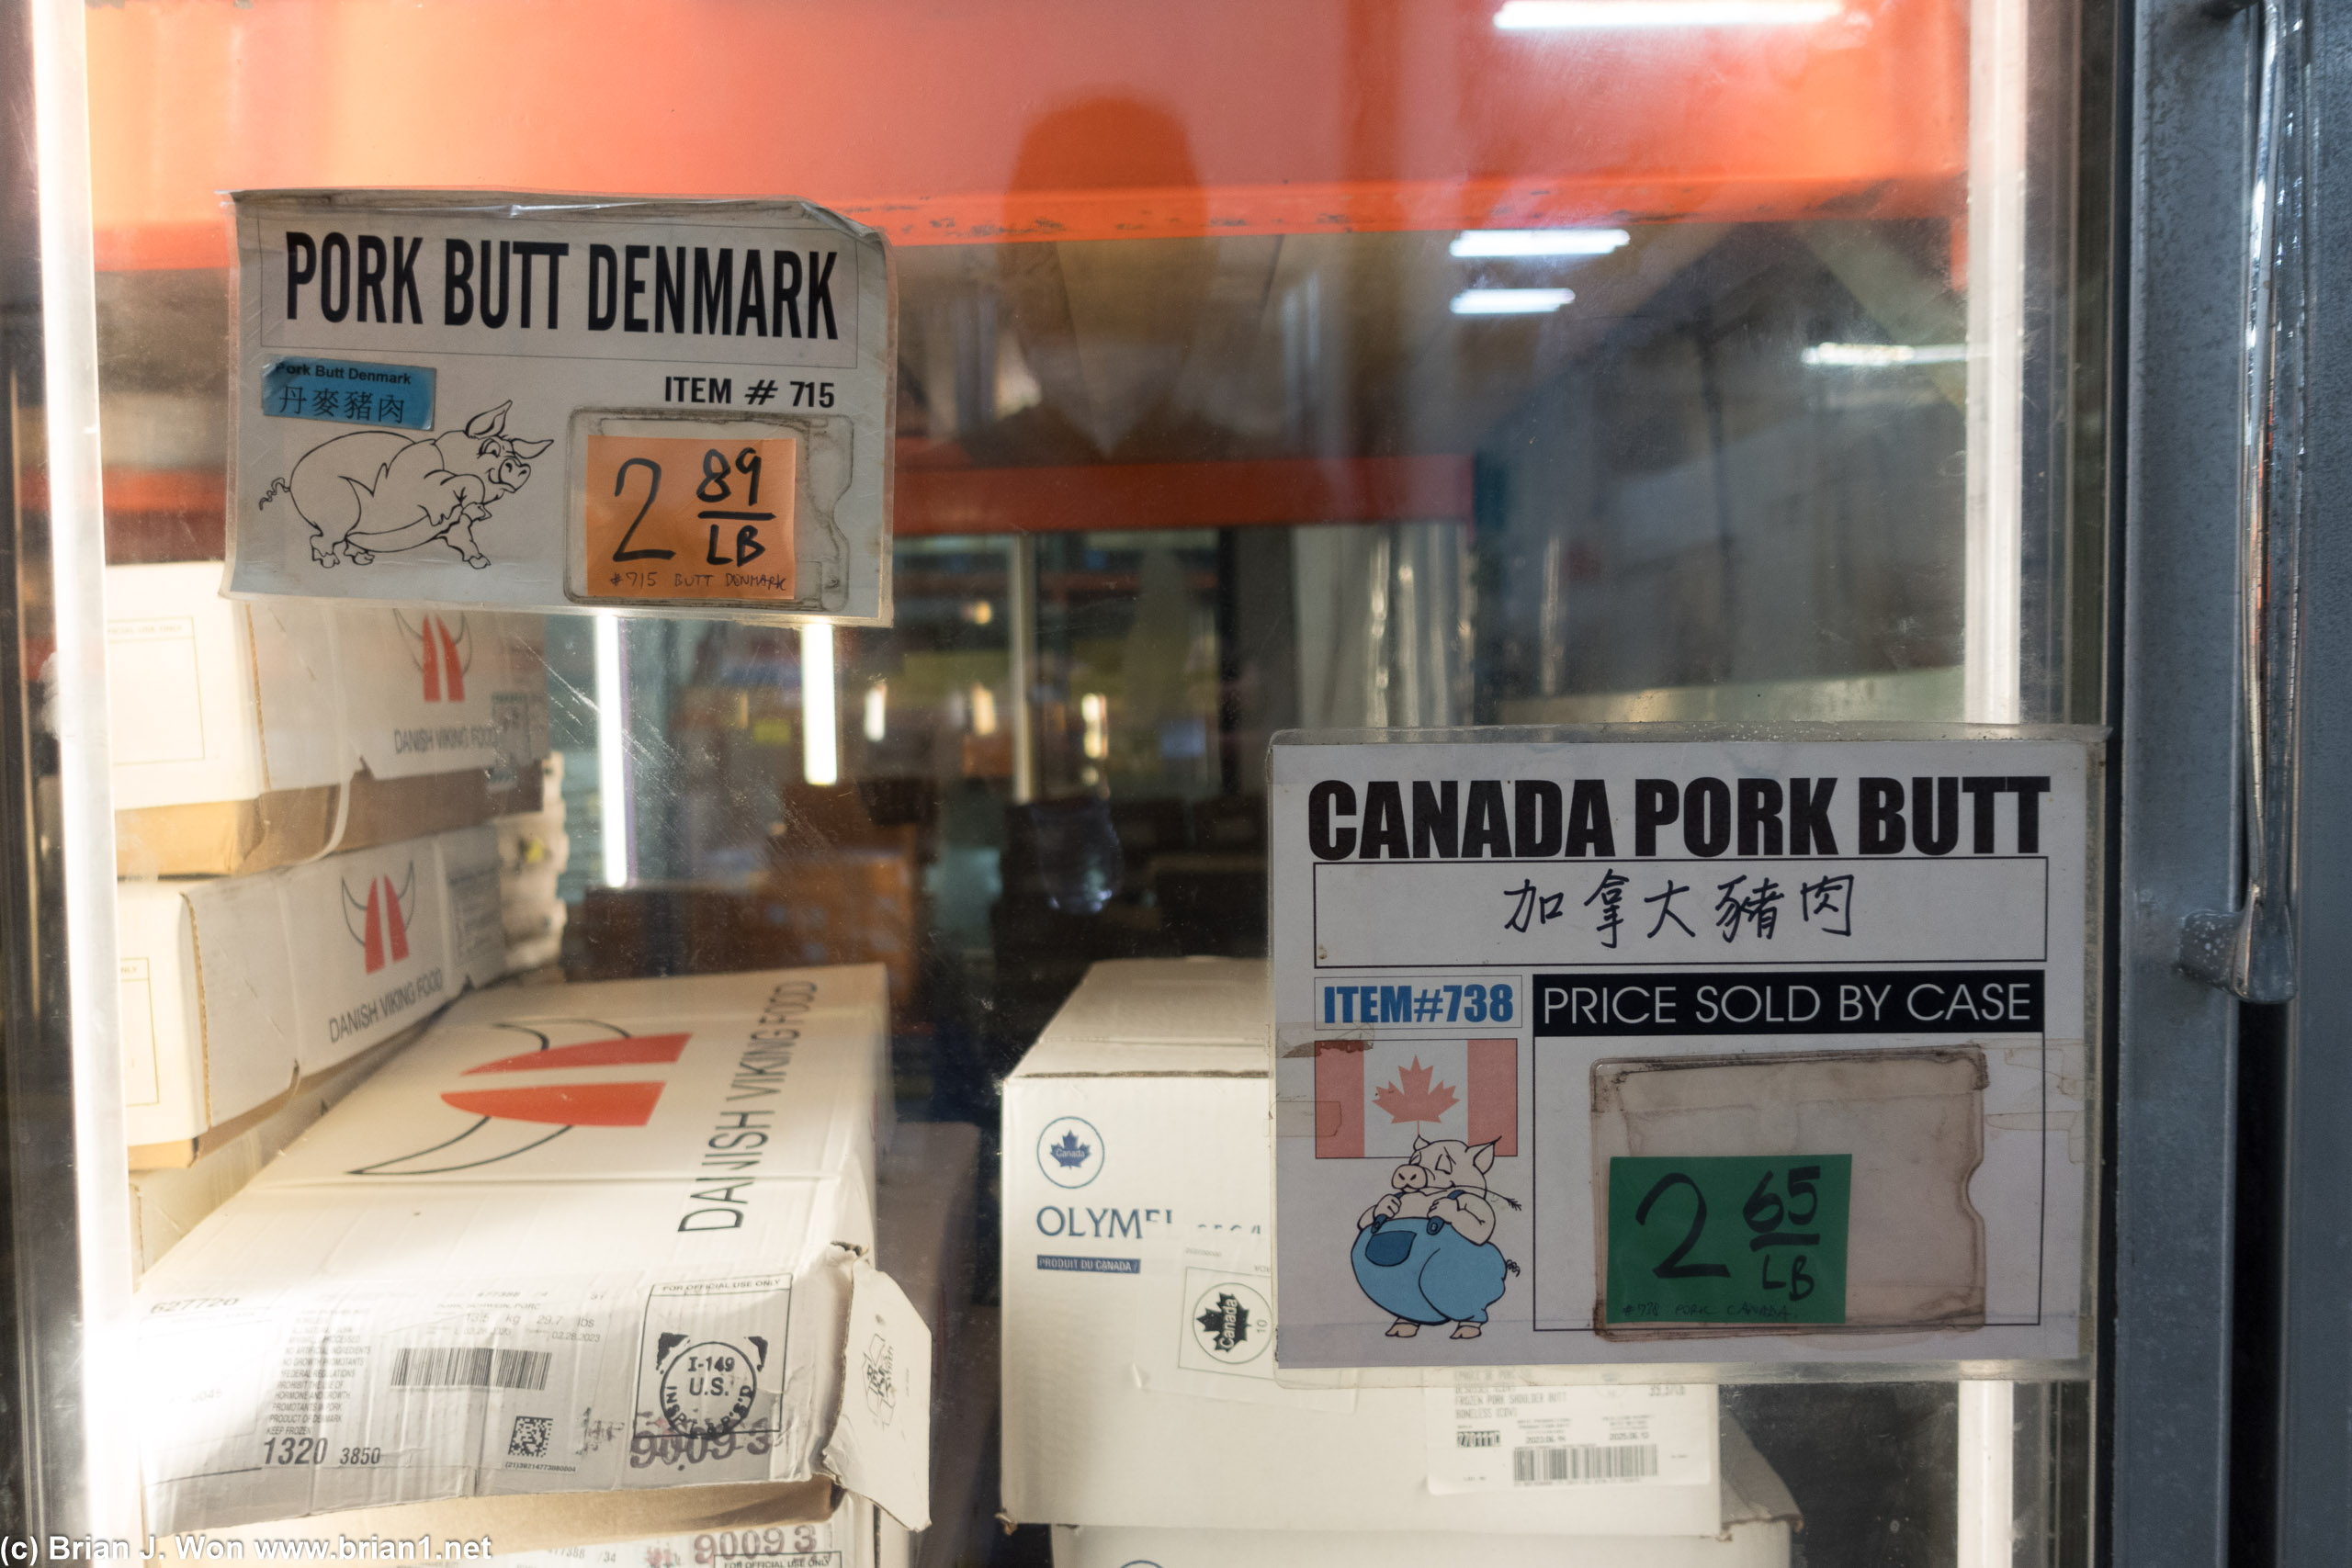 Denmark or Canada for your pork butt?